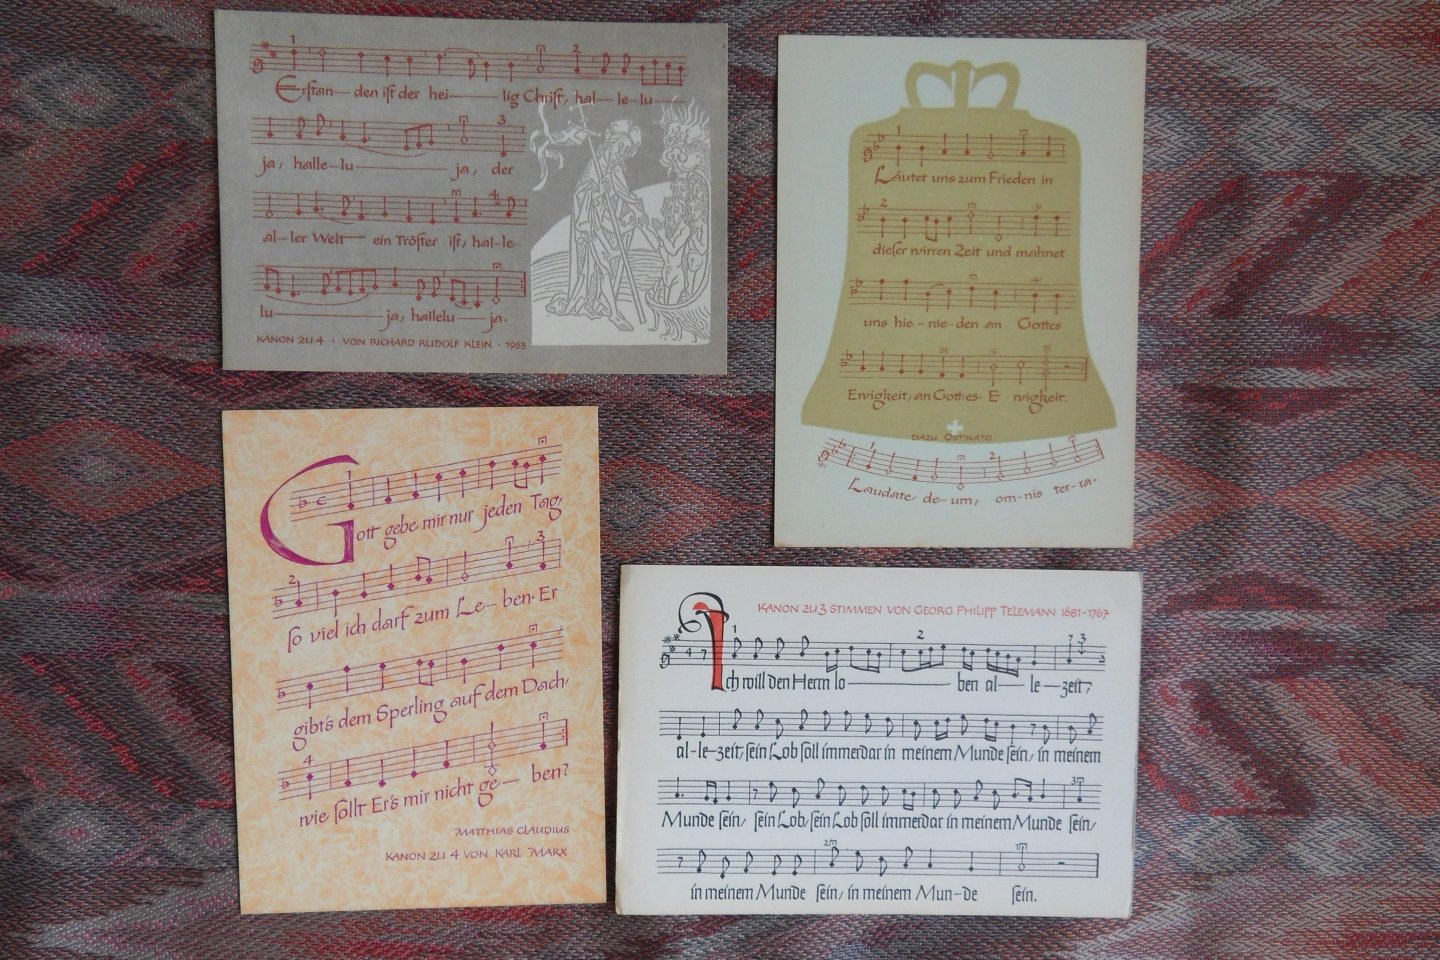 Gnadenquell (bron van herkomst teksten). - Liedpostkarten für die Oster- und Pfingstzeit. [ mapje bevat acht losse kaarten met muzieknotatie en grafische afbeelding].